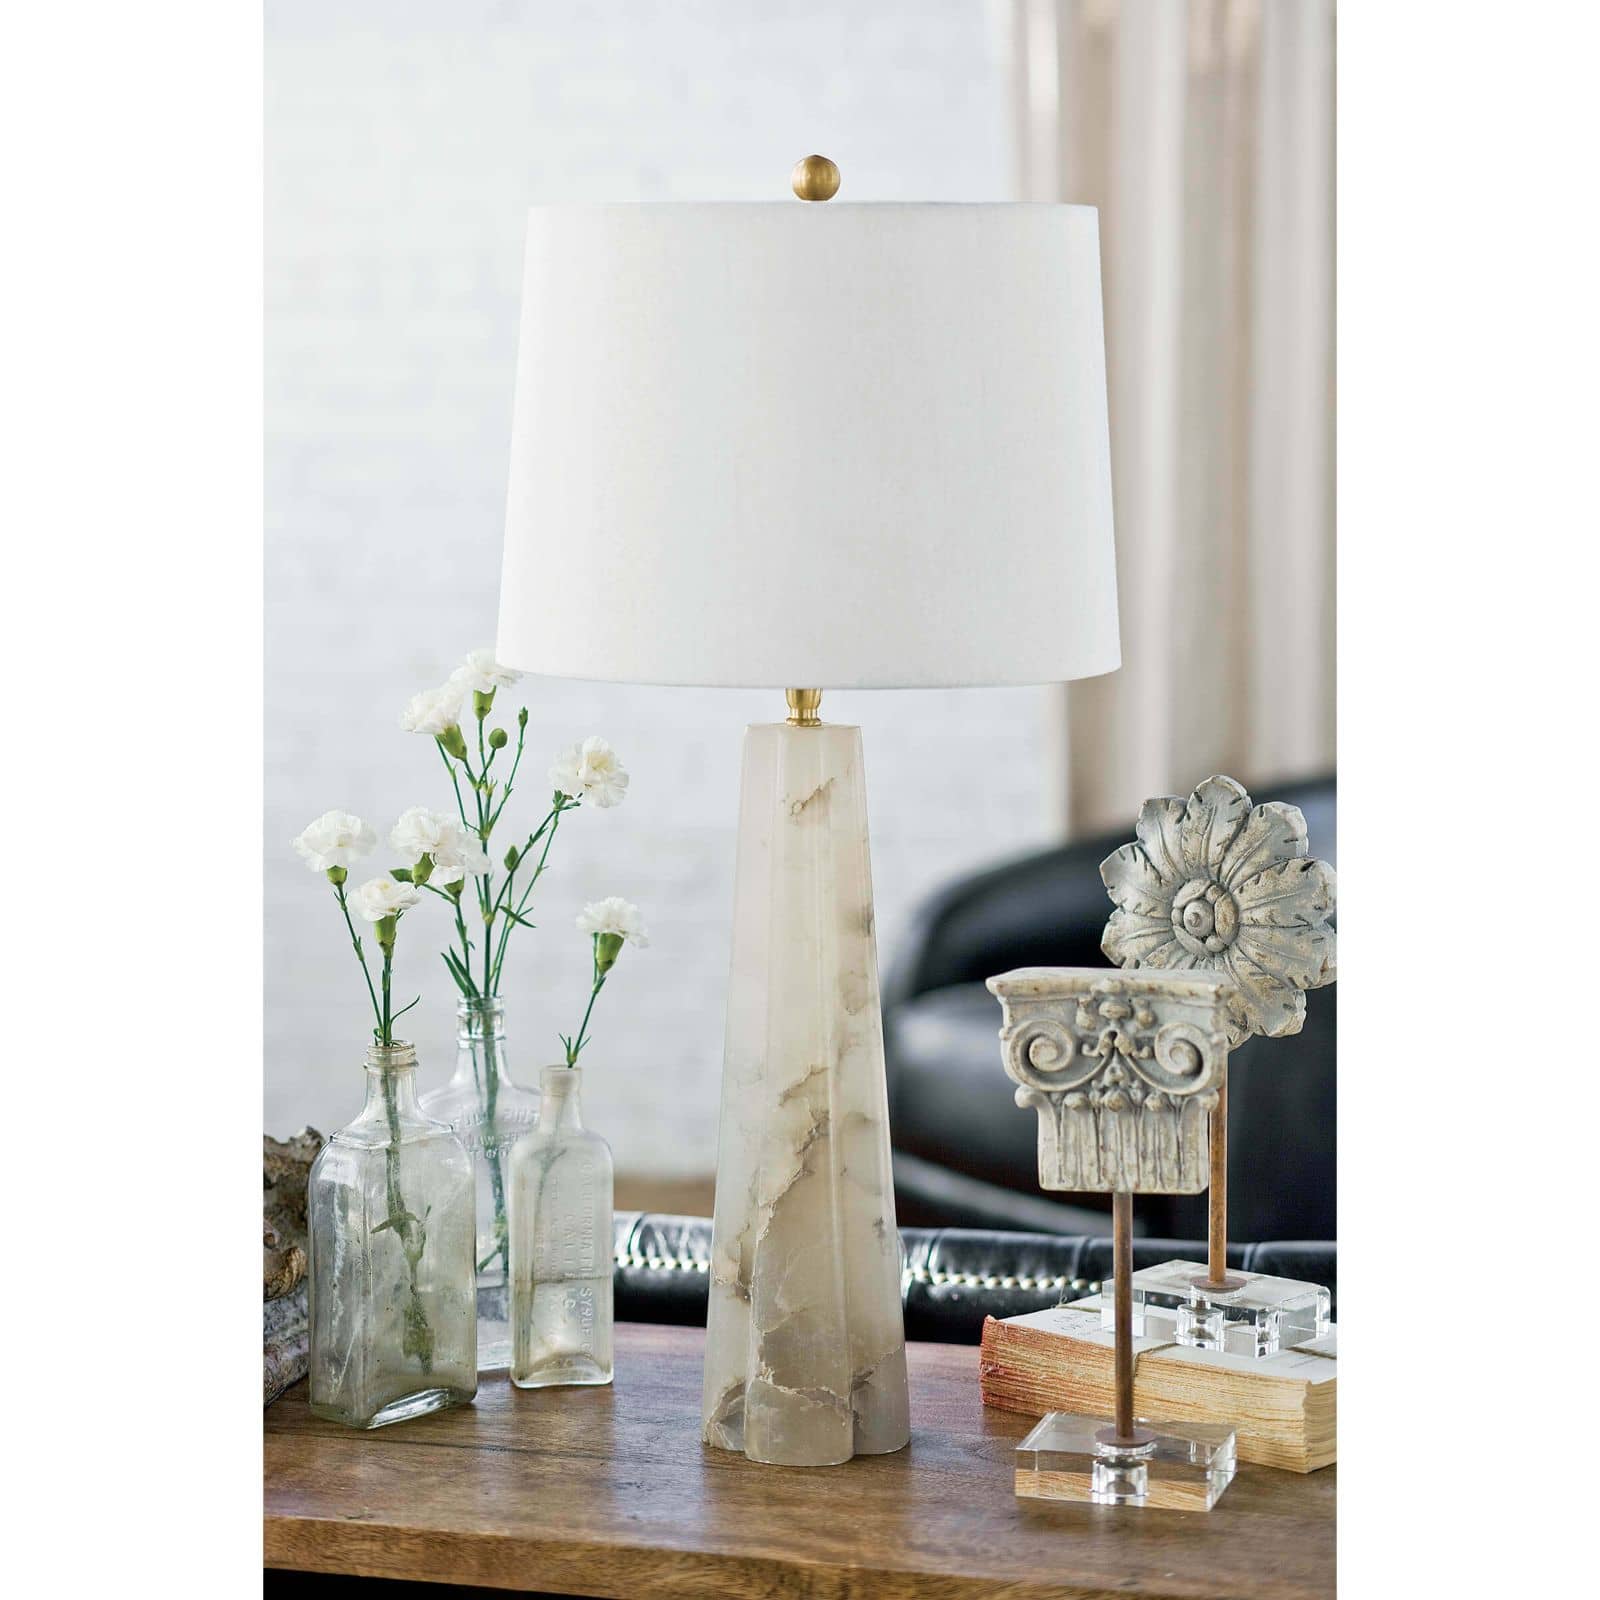 Quatrefoil Alabaster Table Lamp Small by Regina Andrew